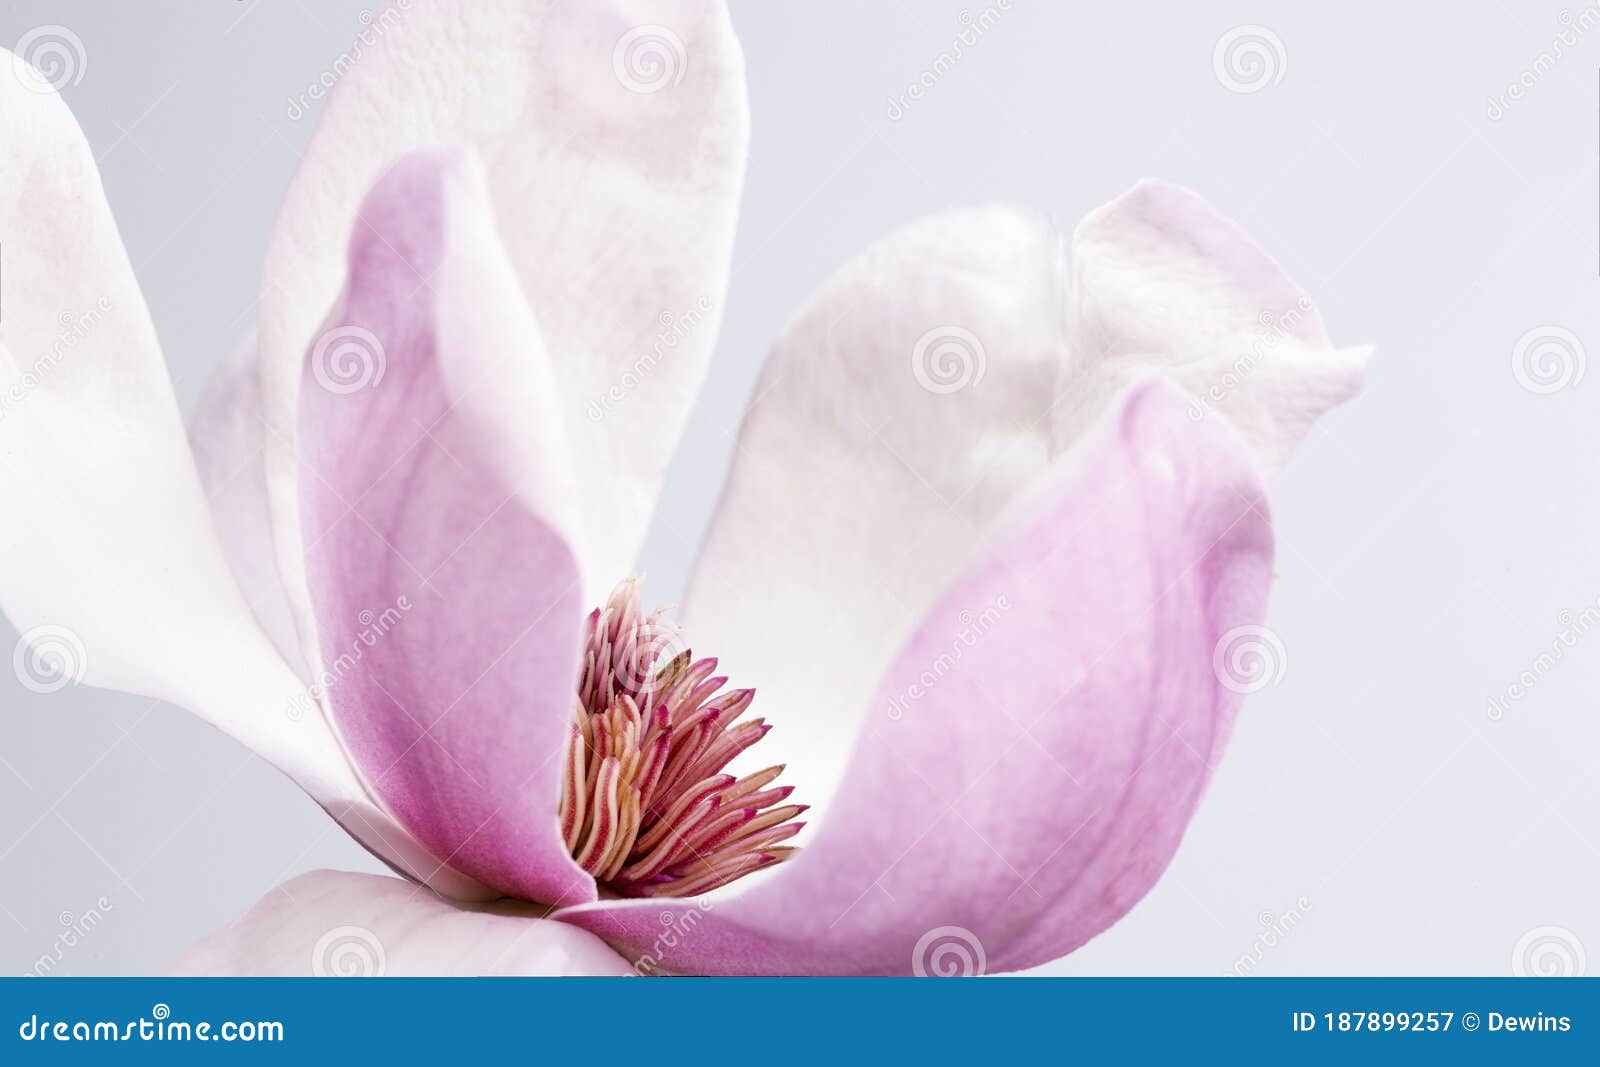 magnolia liliiflora flower, lily magnolia flower on gray background, purple magnolia flower